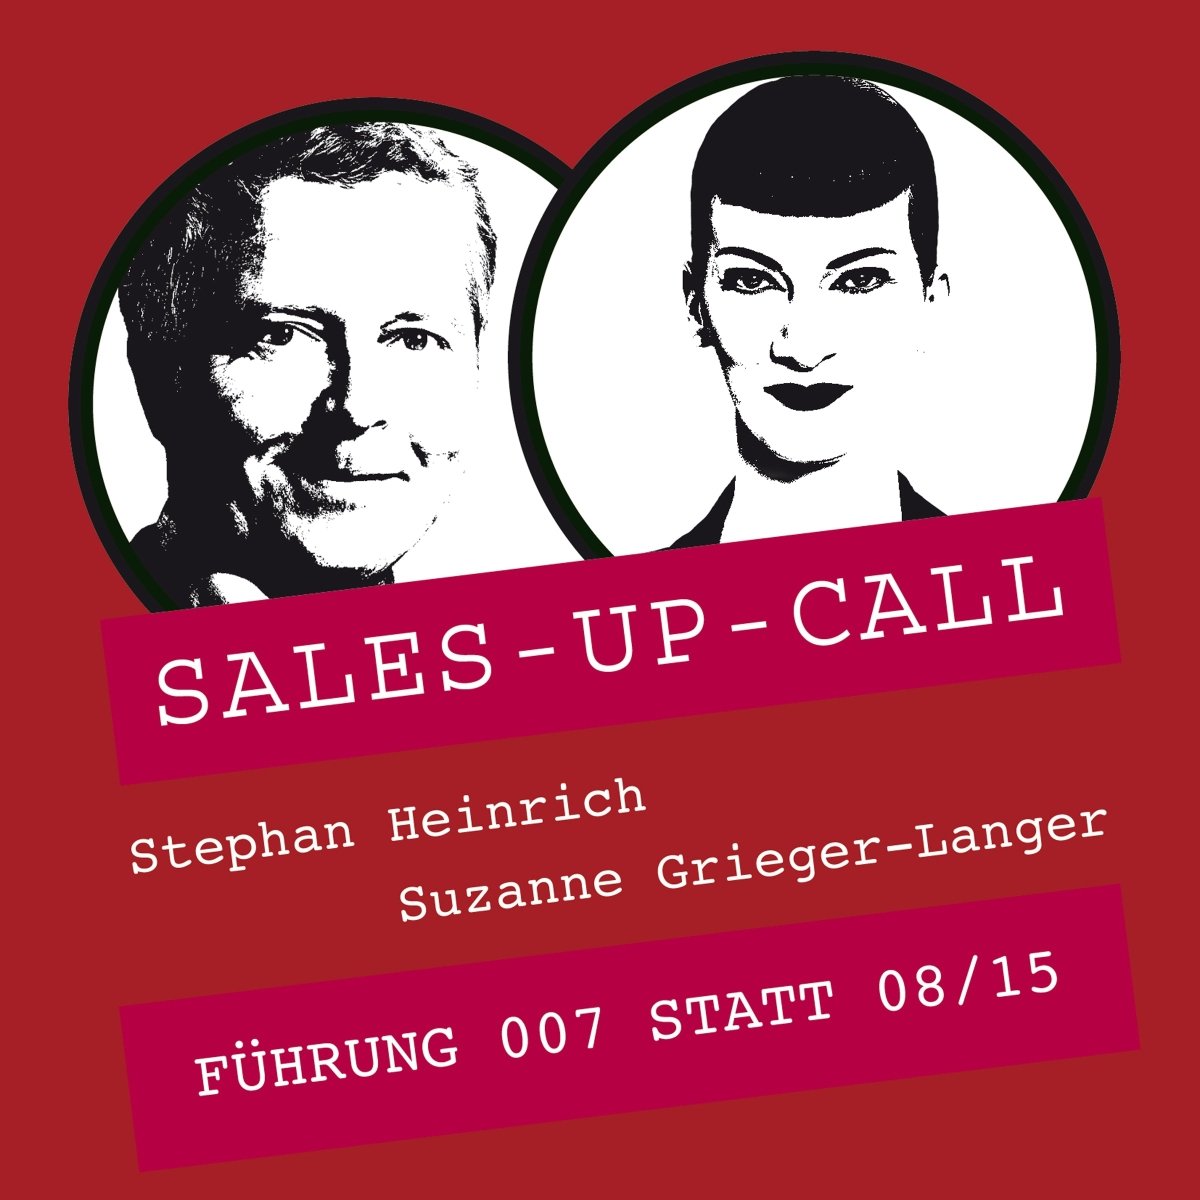 Führung 007 statt 08/15 - Suzanne Grieger-Langer - Sales-up-Call - Stephan Heinrich